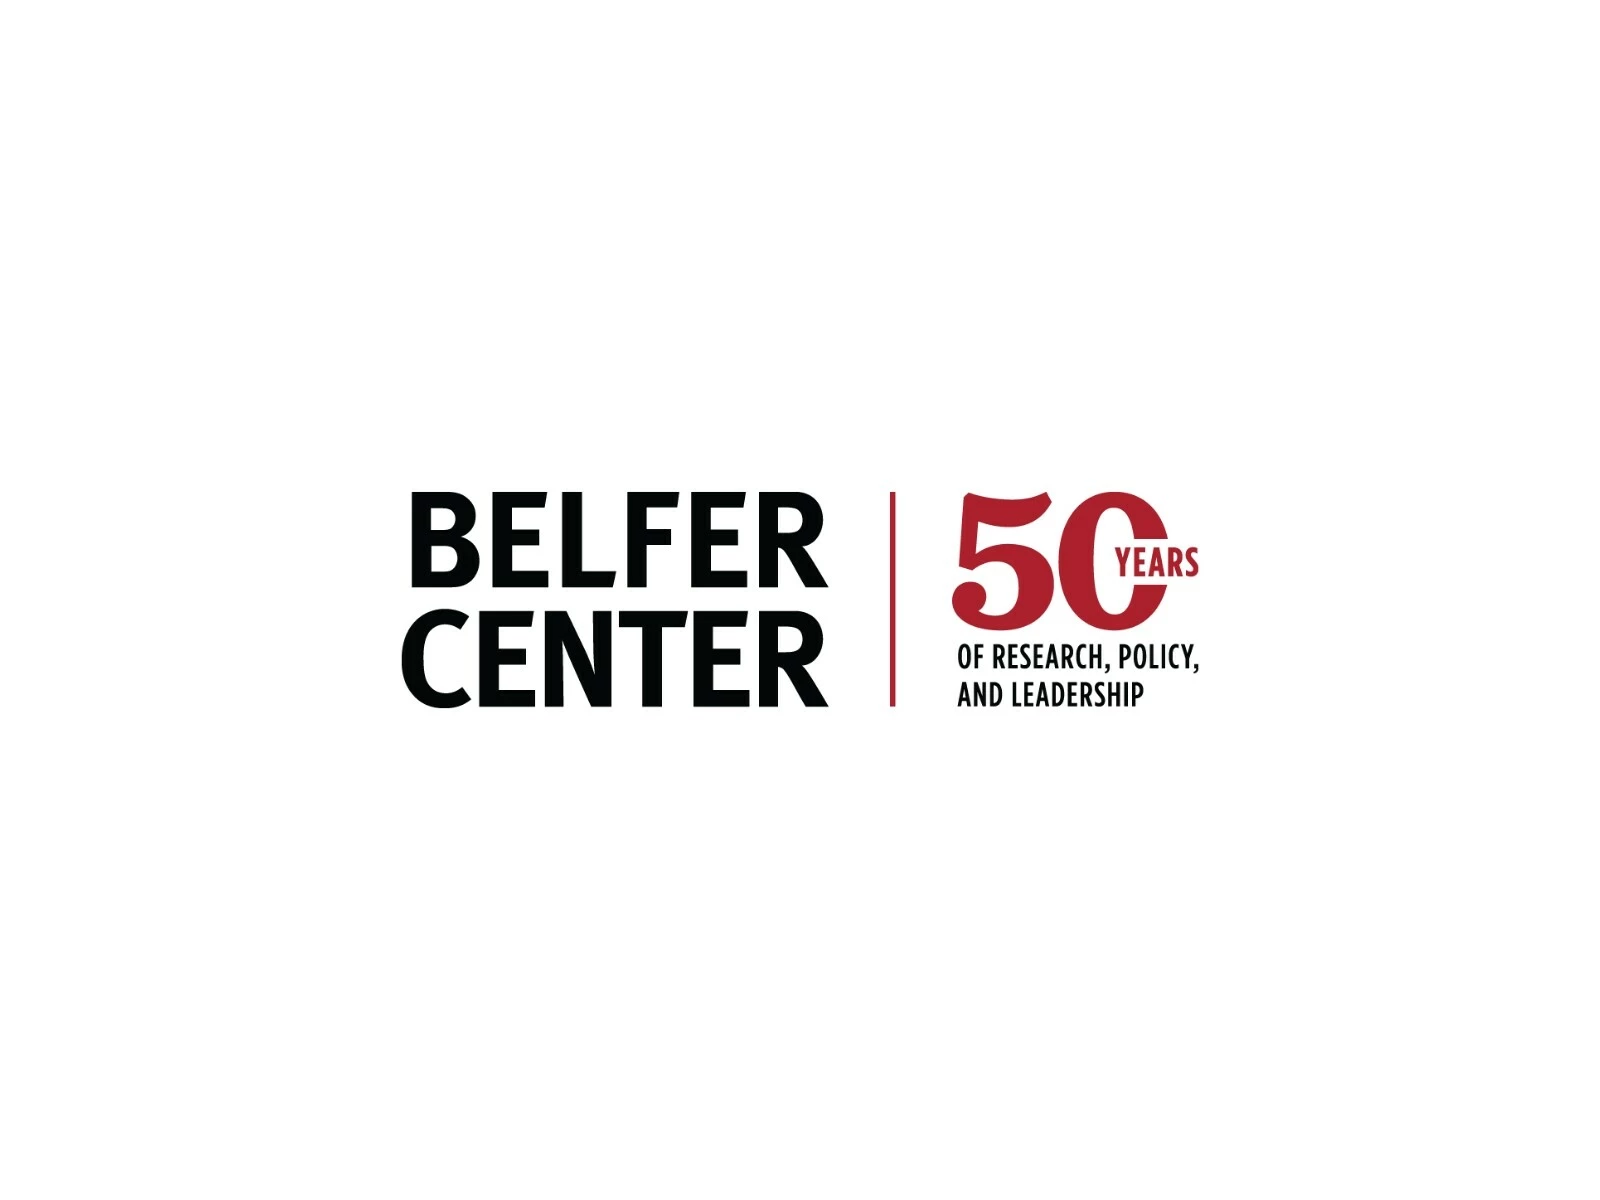 Secondary Belfer Center 50 years logo